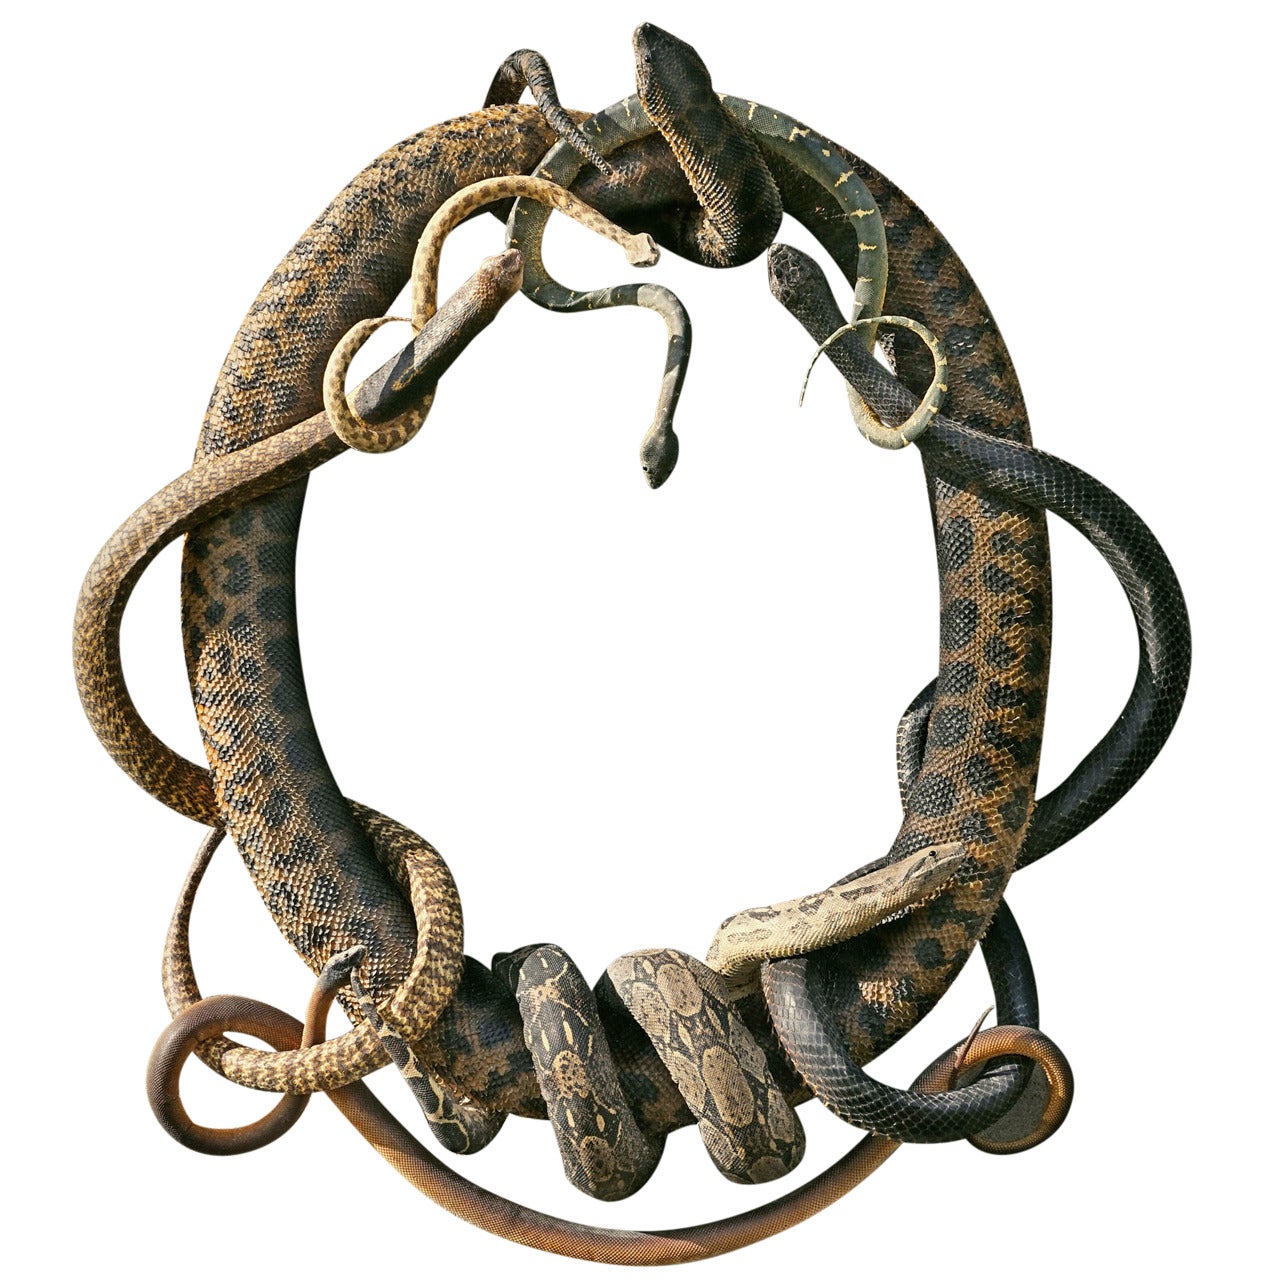 Fine Taxidermy 'Snake Heraldry' by Sinke & Van Tongeren